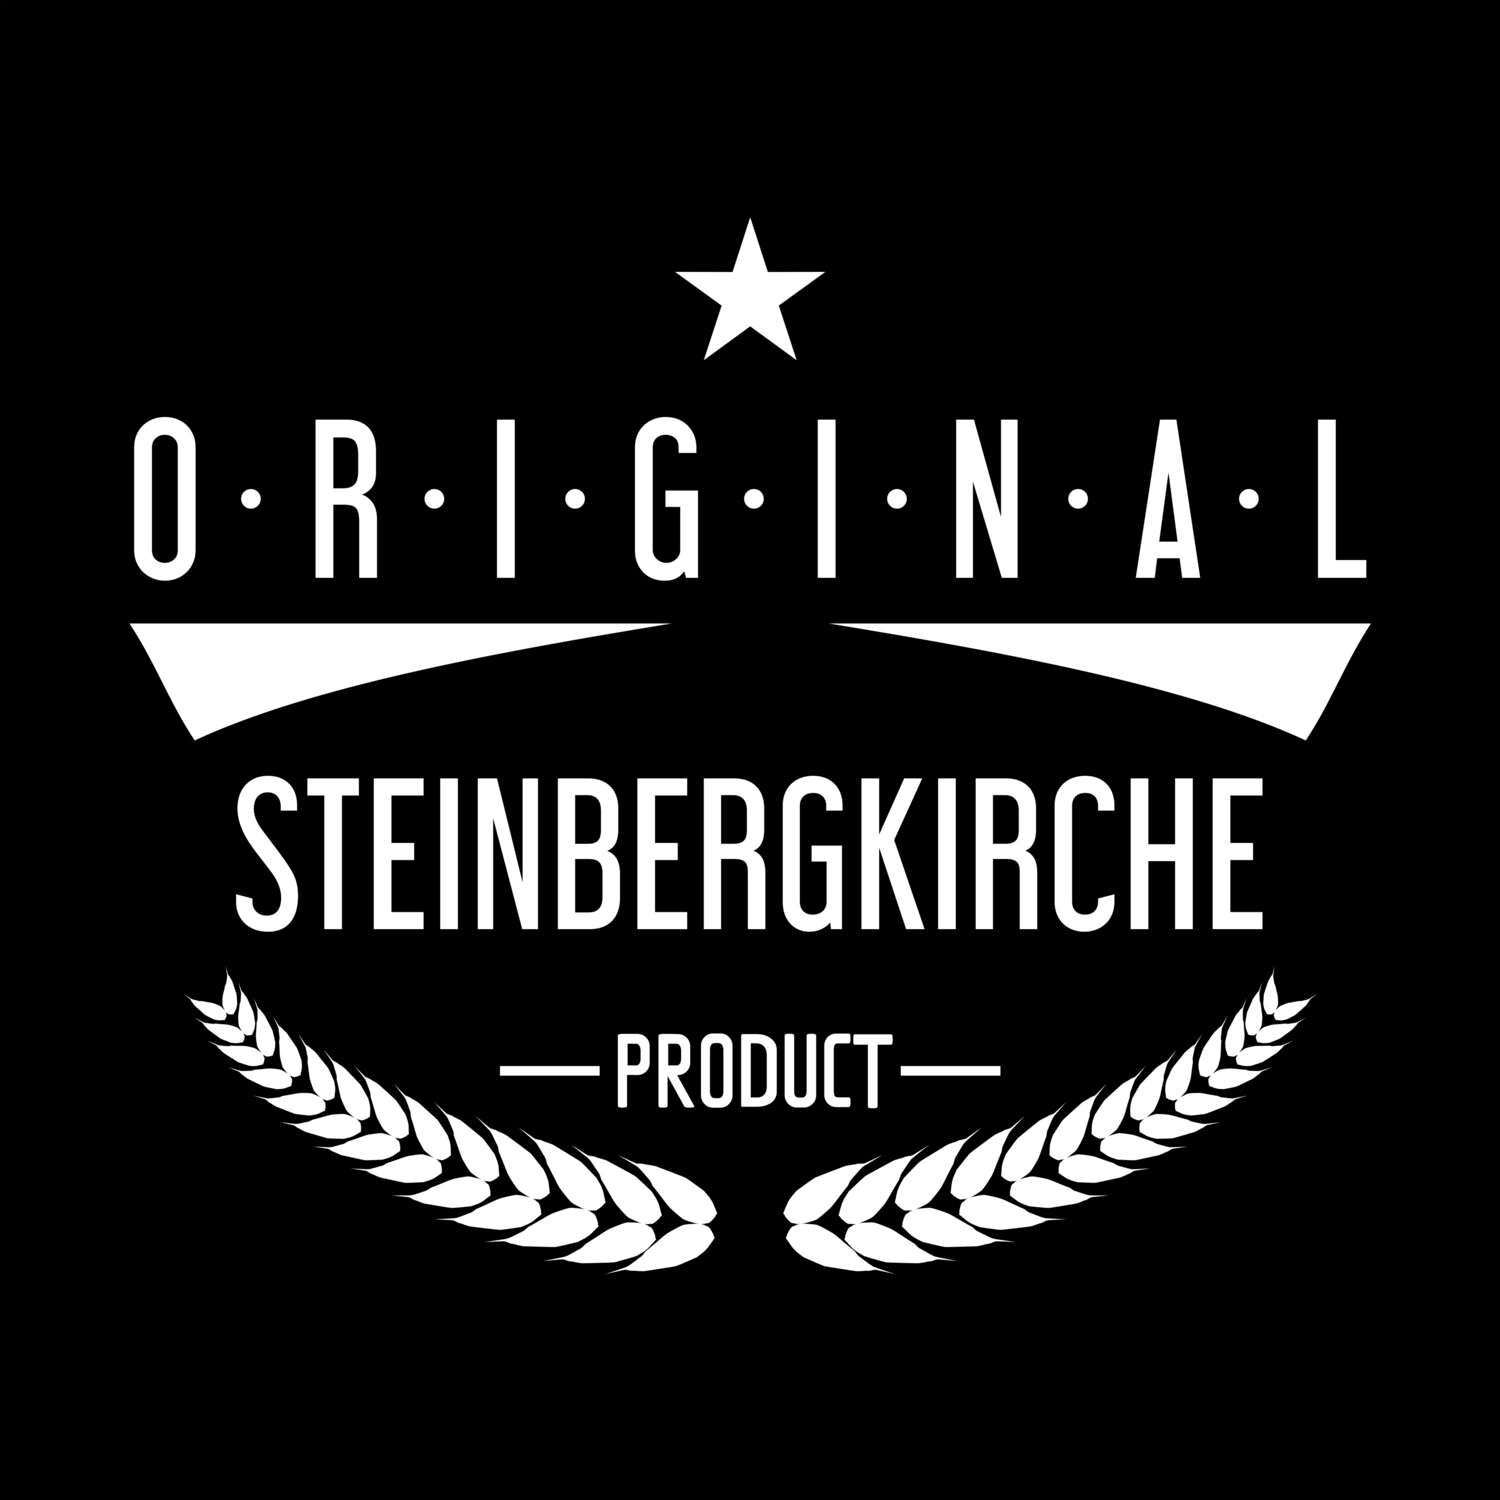 Steinbergkirche T-Shirt »Original Product«